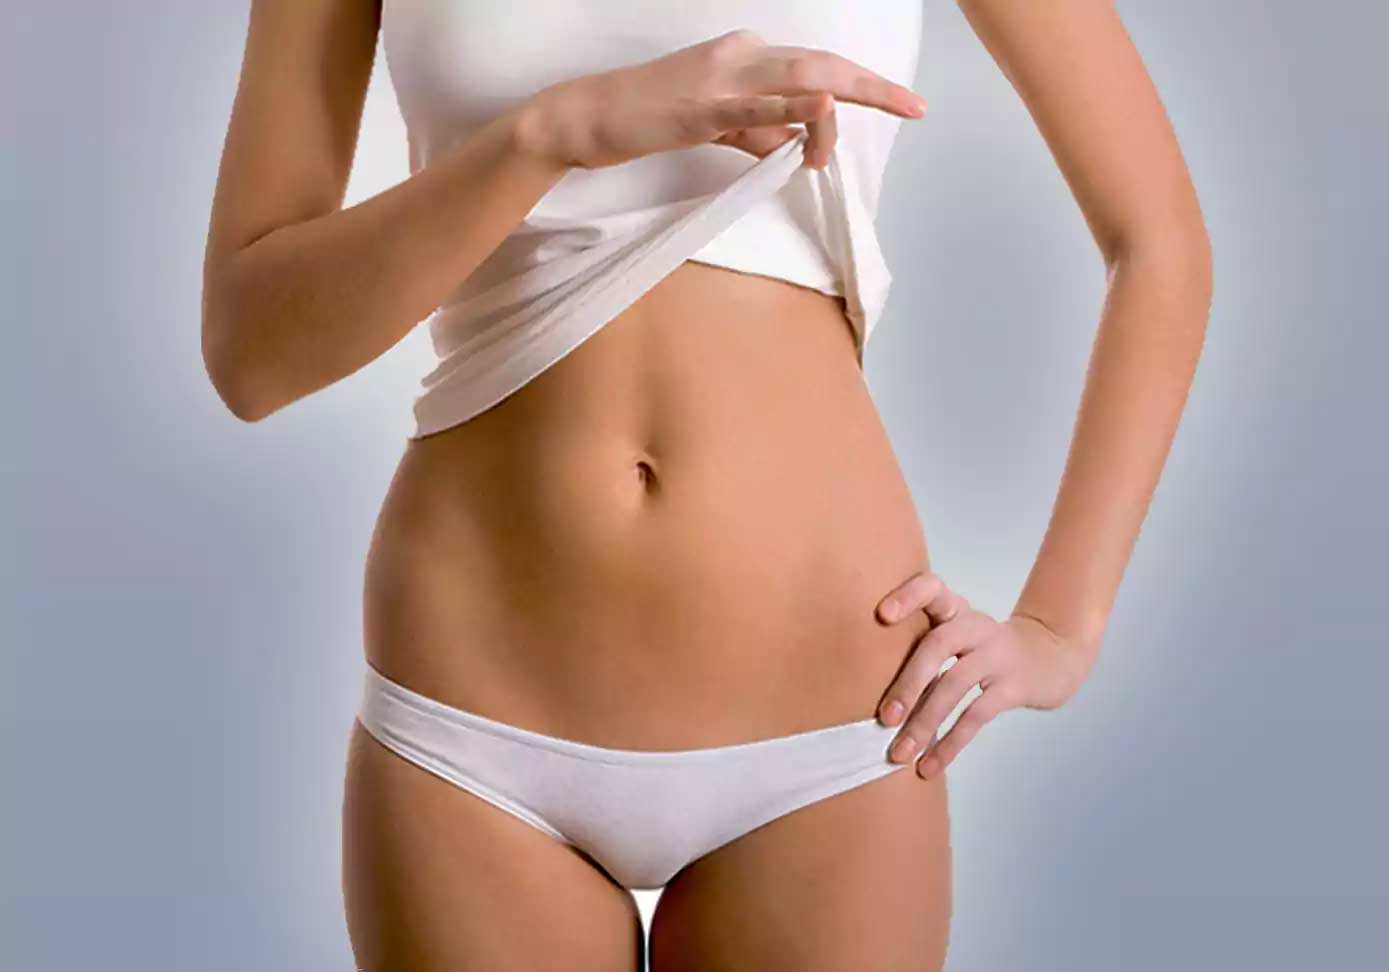 benefits of liposuction